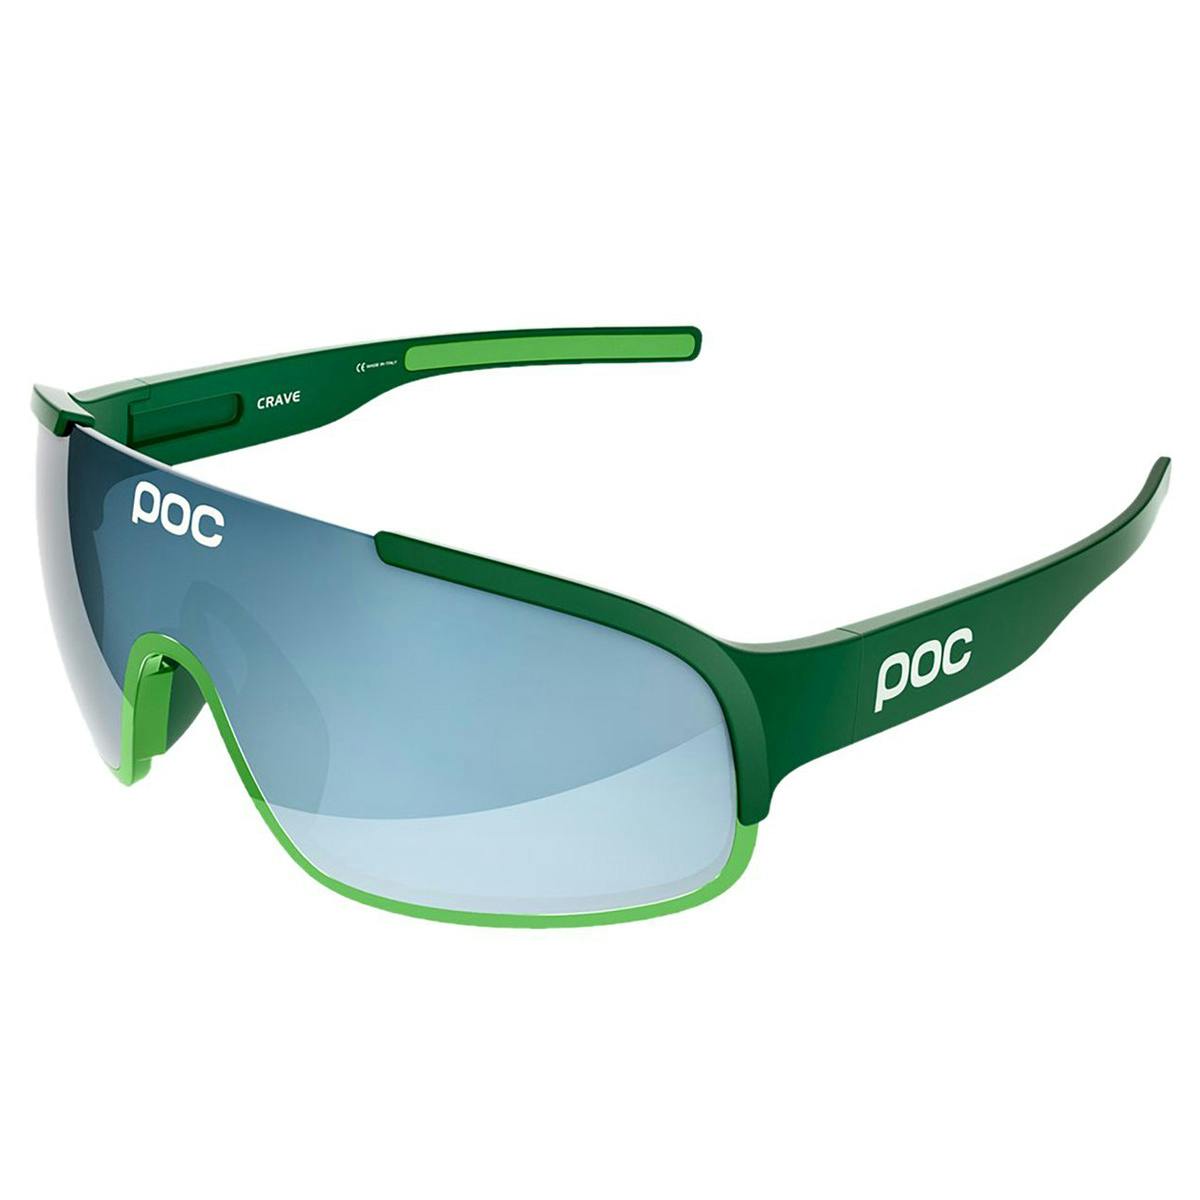 POC Crave Sunglasses · Molybdenite Green/Phospate Green · Sport